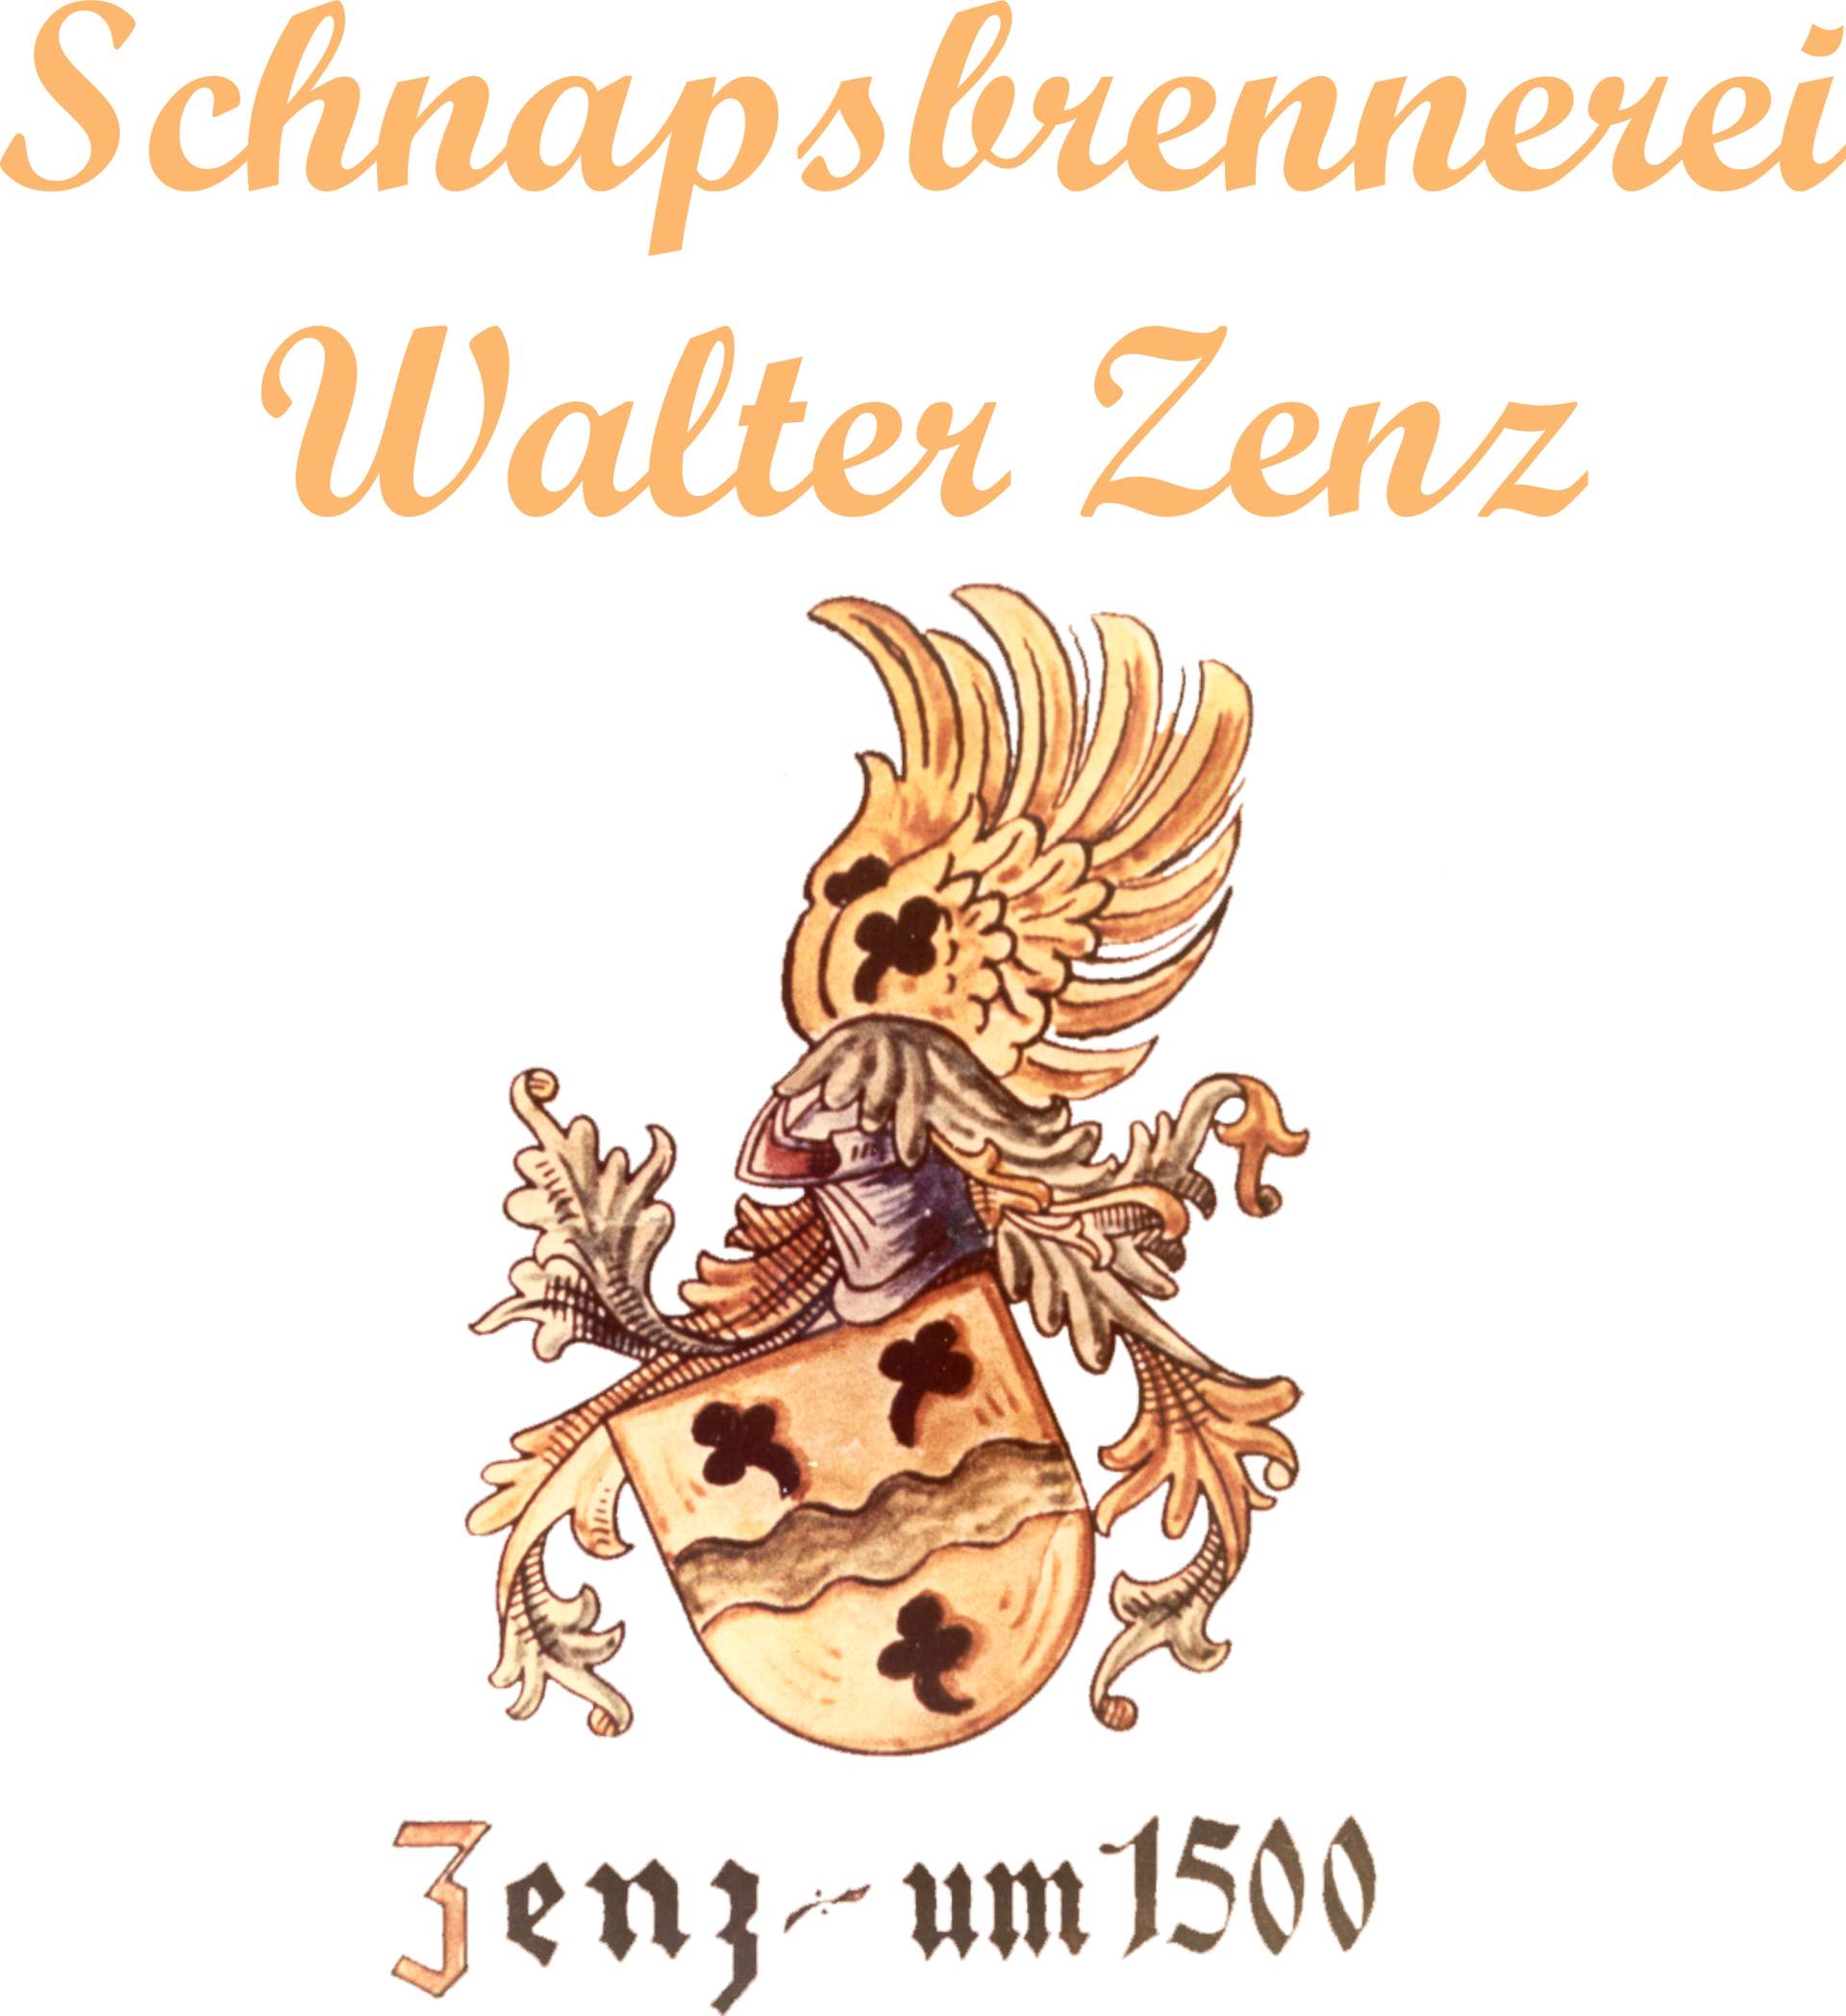 Schnapsbrennerei Walter Zenz